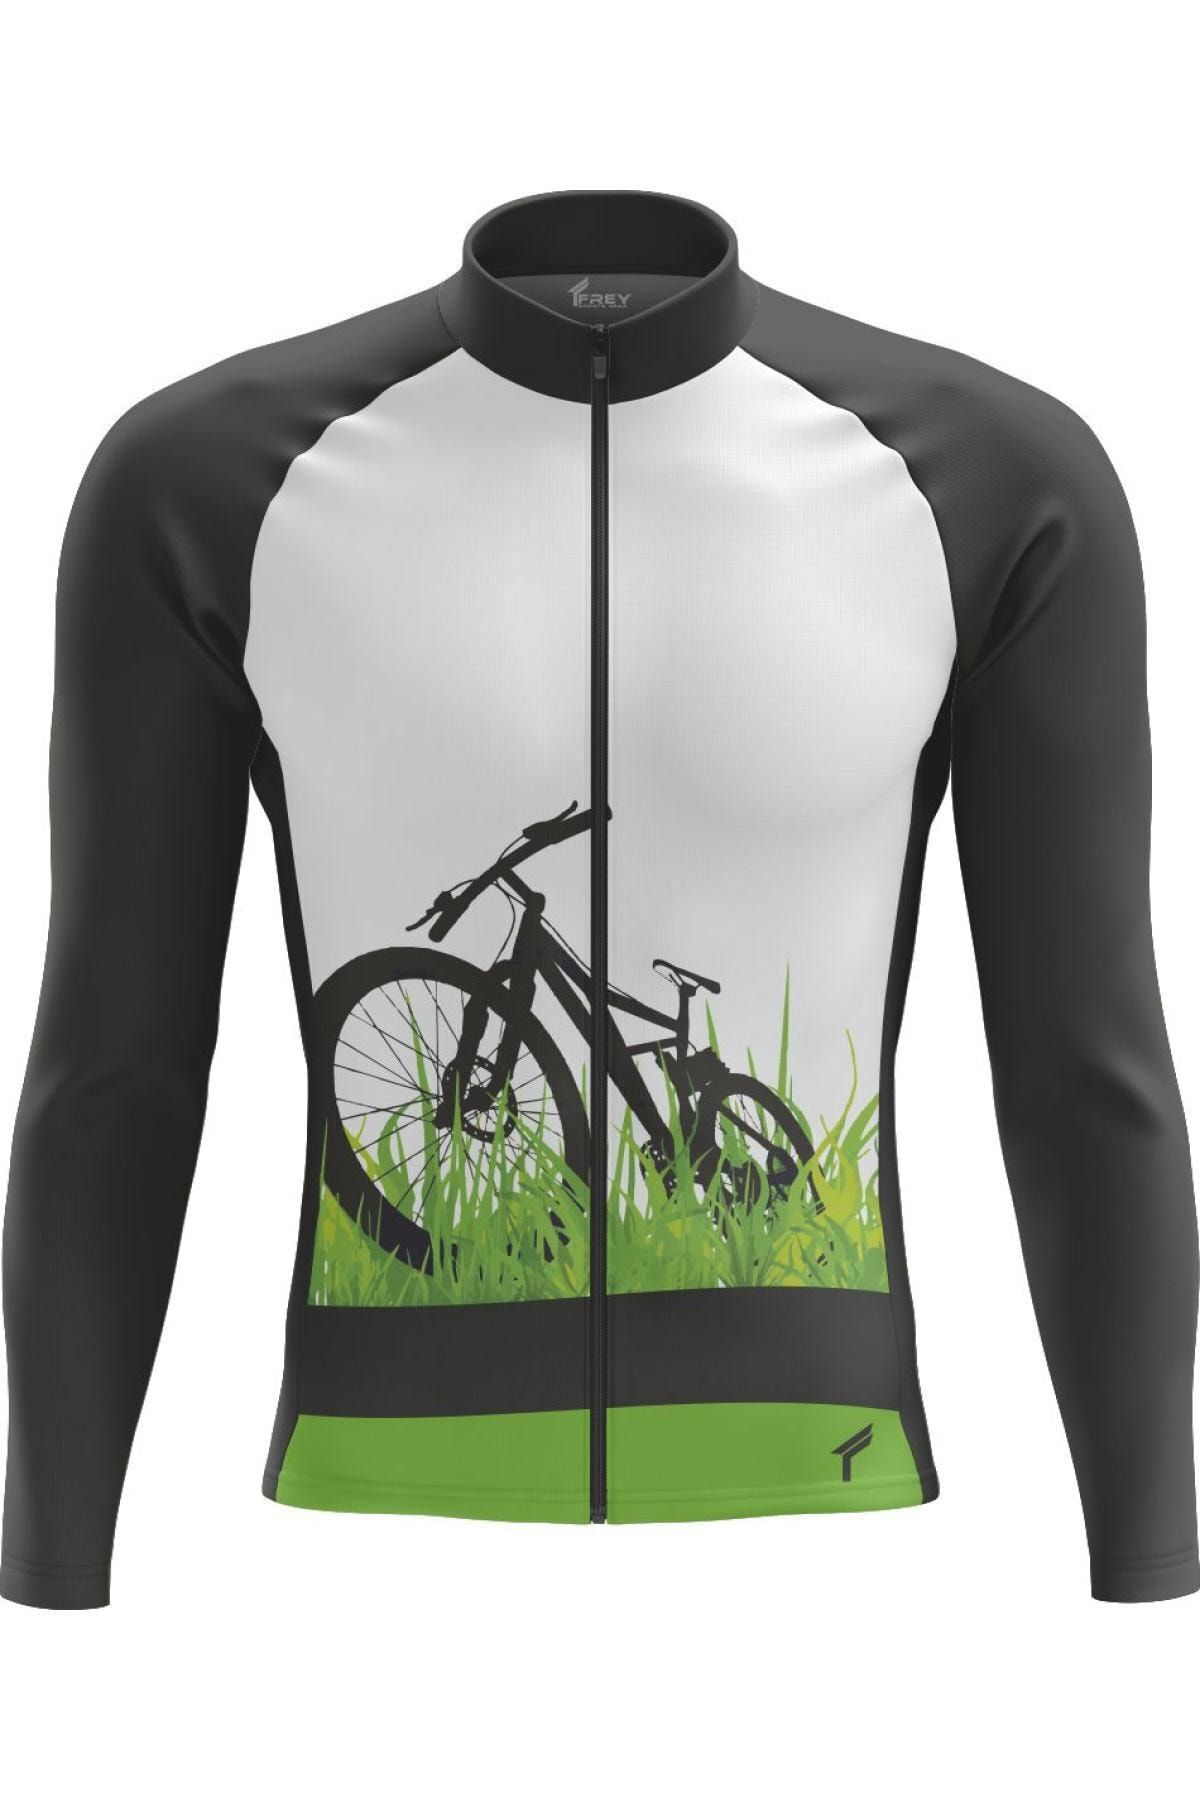 Freysport Unisex Siyah Grass Kışlık Bisiklet Forması